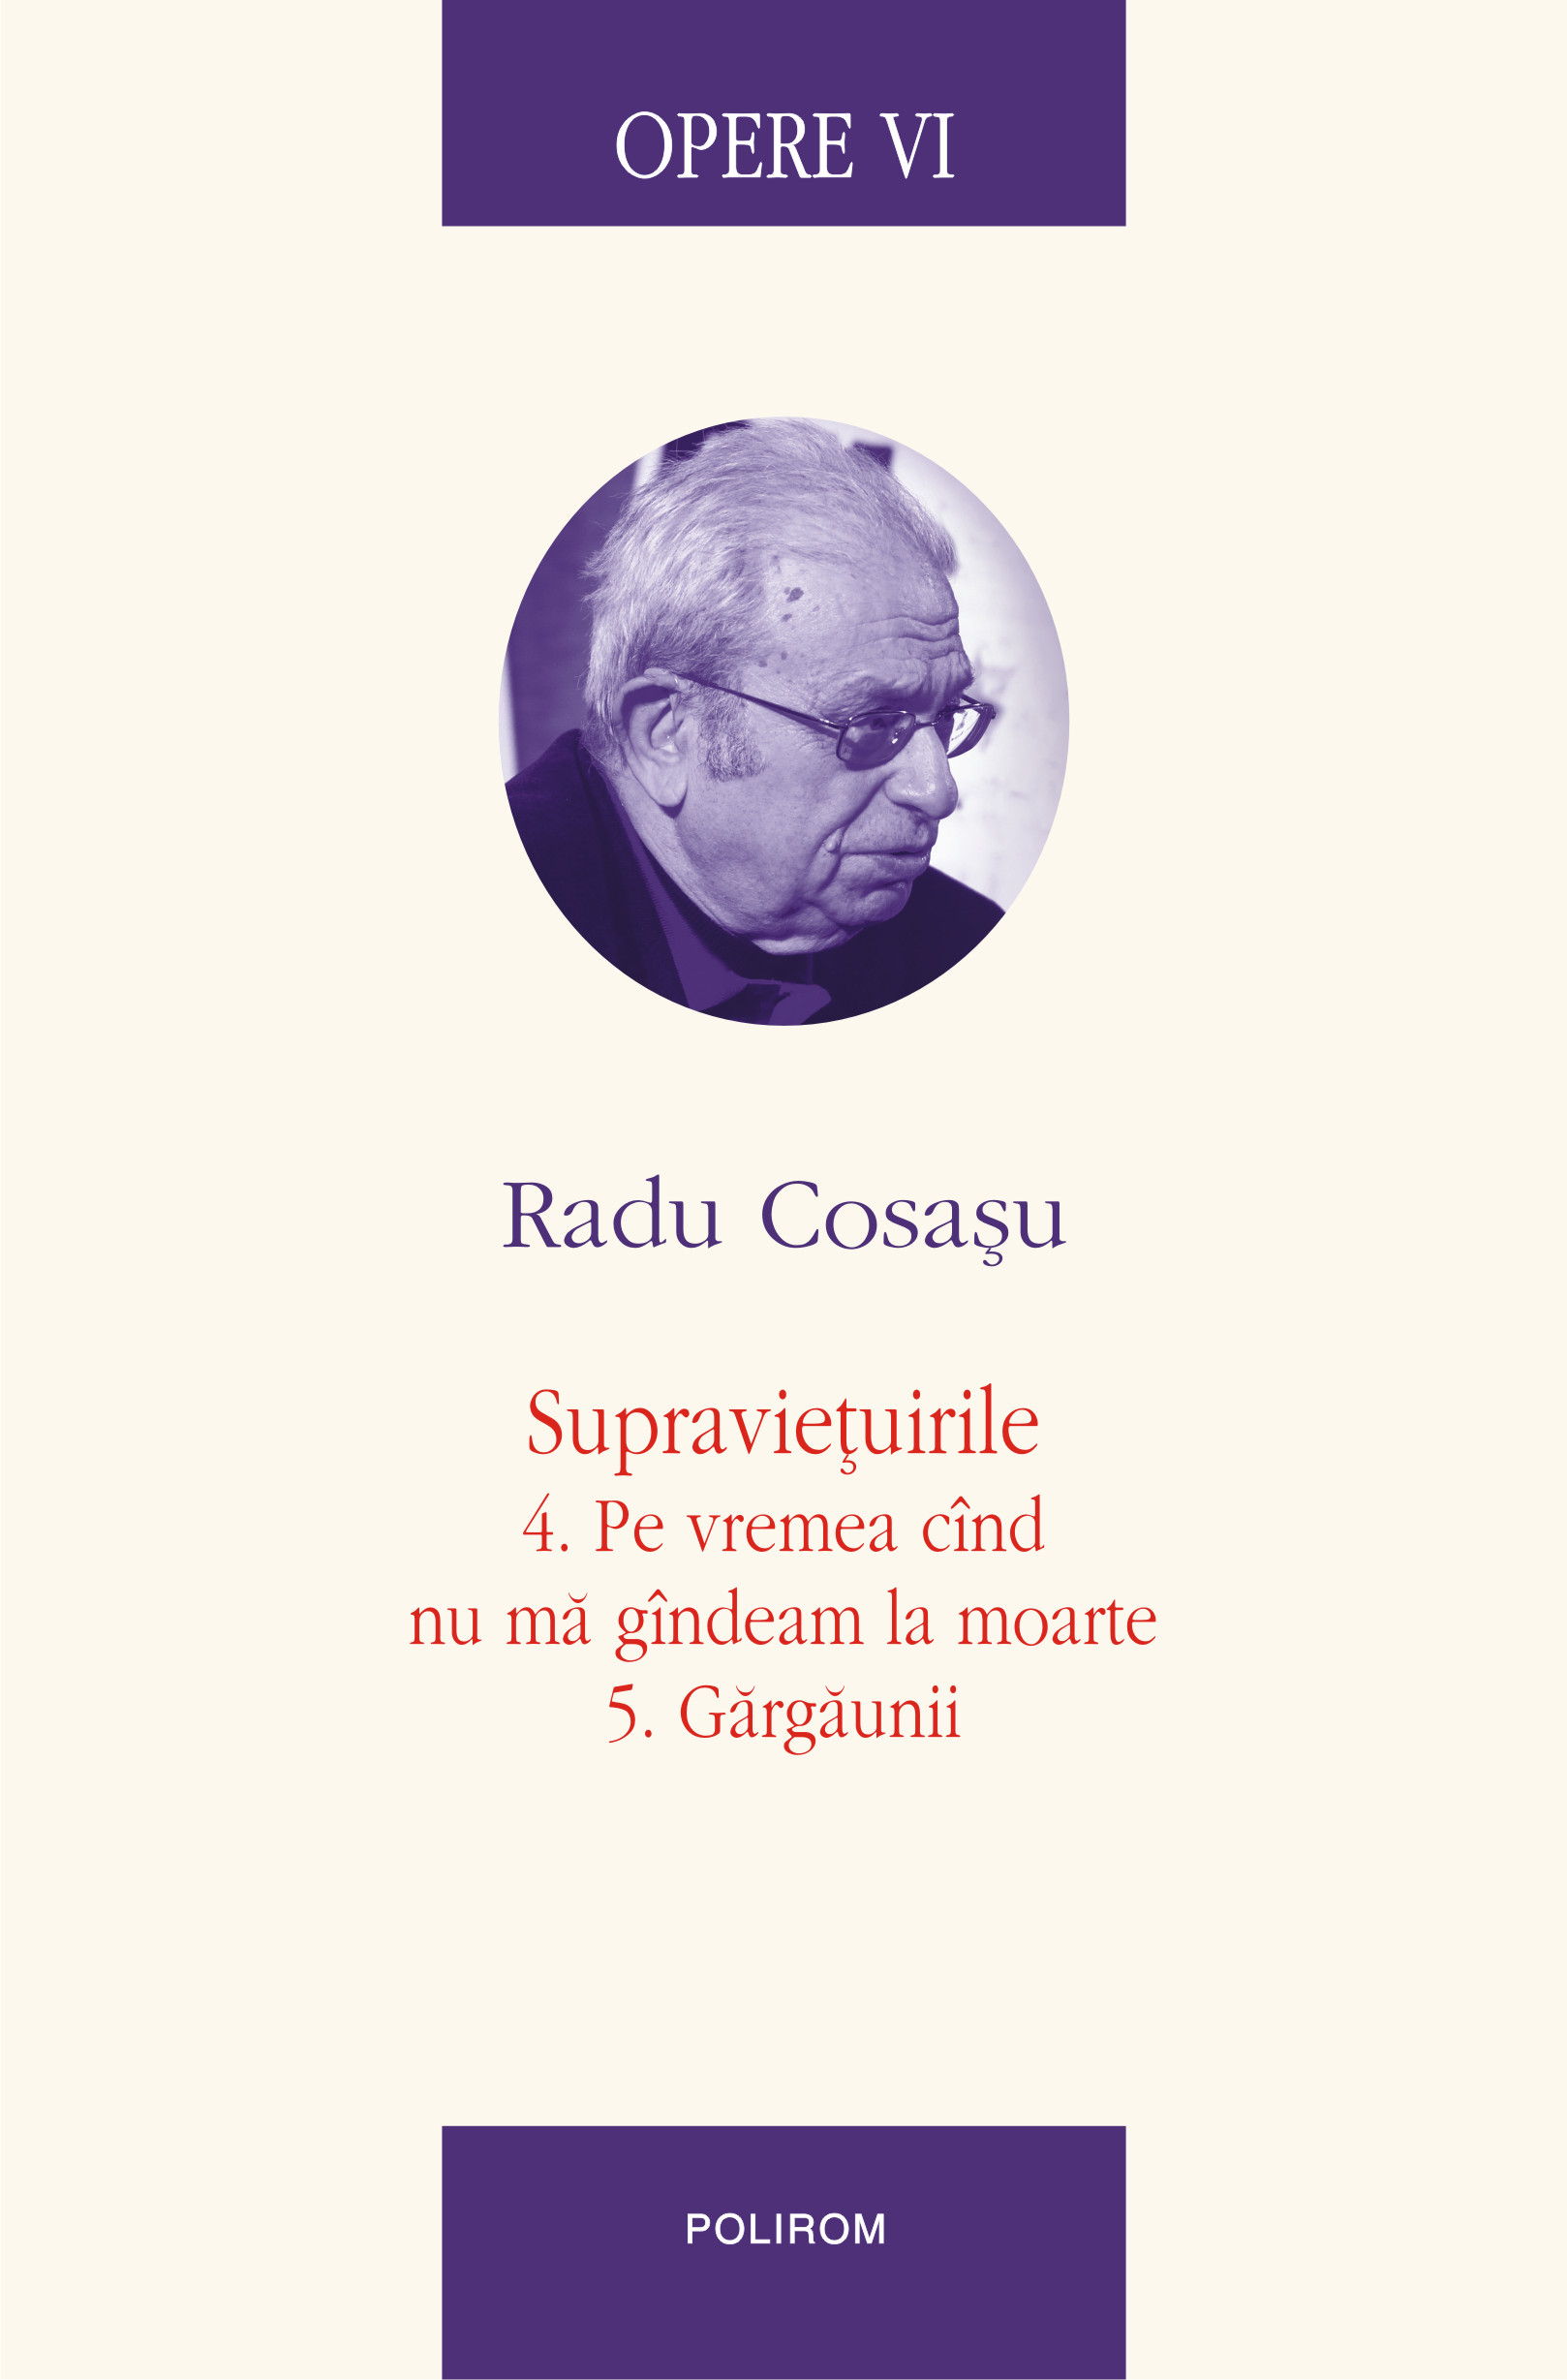 eBook Opere VI. Supravietuirile - Radu Cosasu